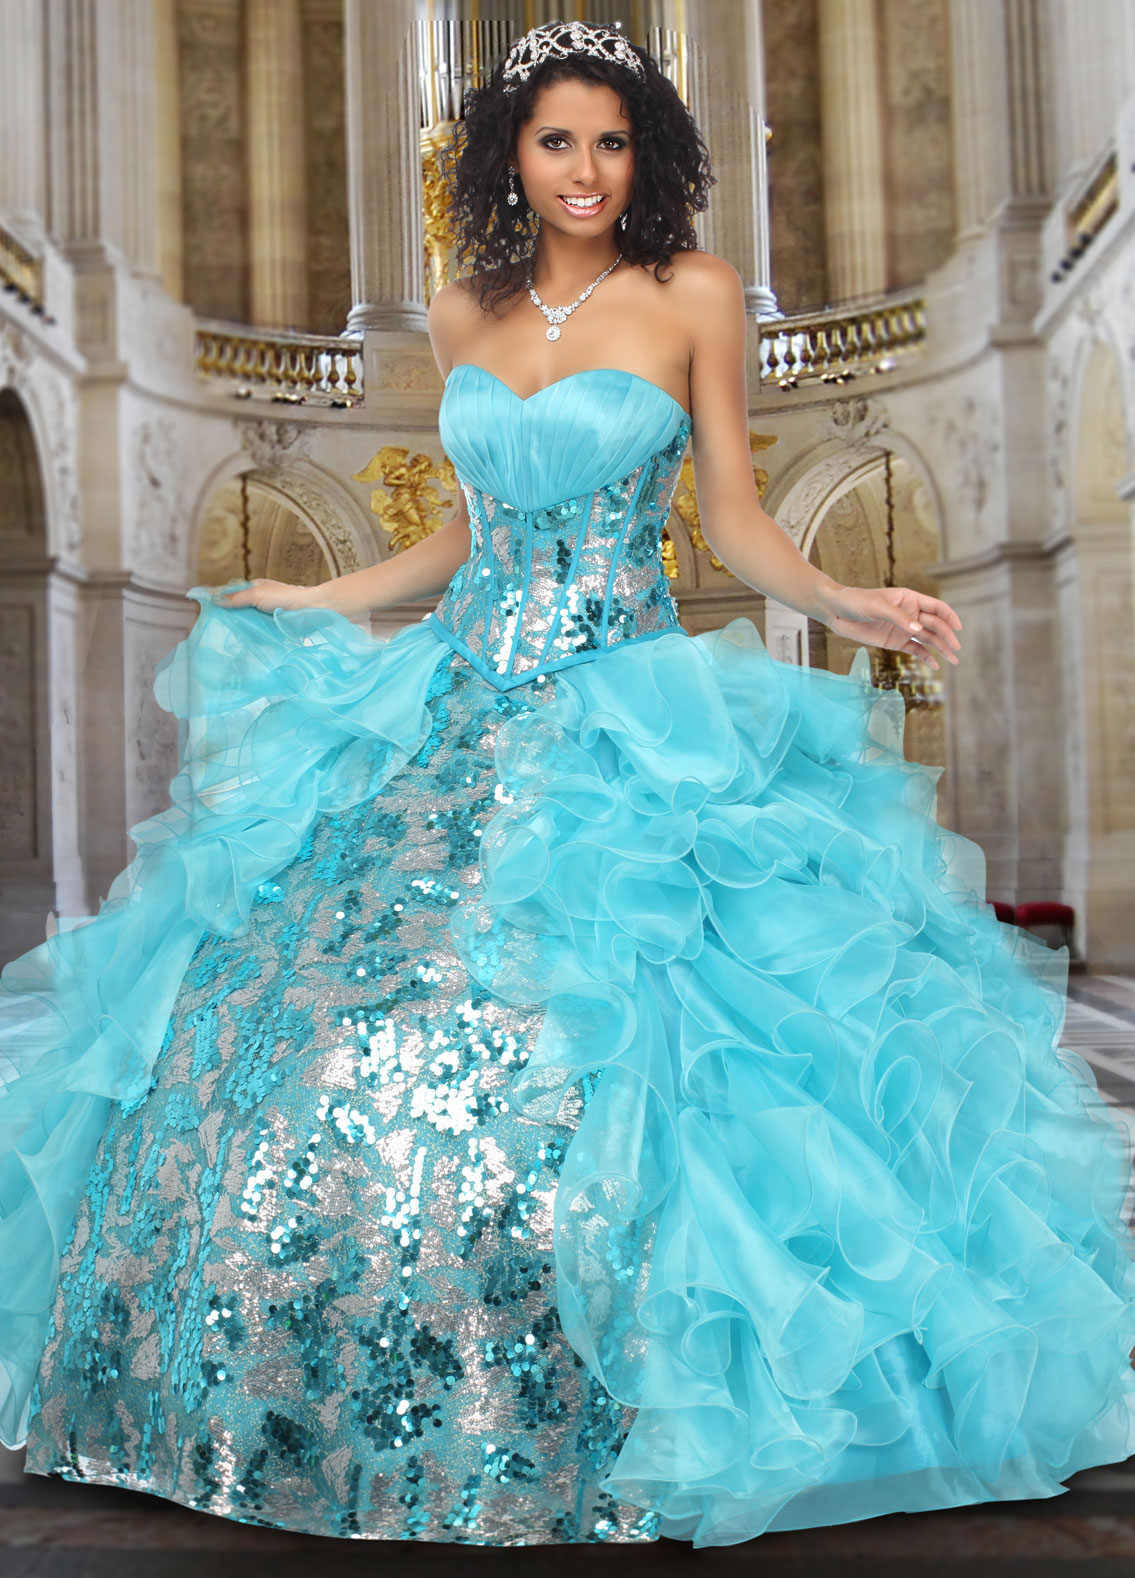 Blue Quinceanera Dresses Picture Collection | DressedUpGirl.com